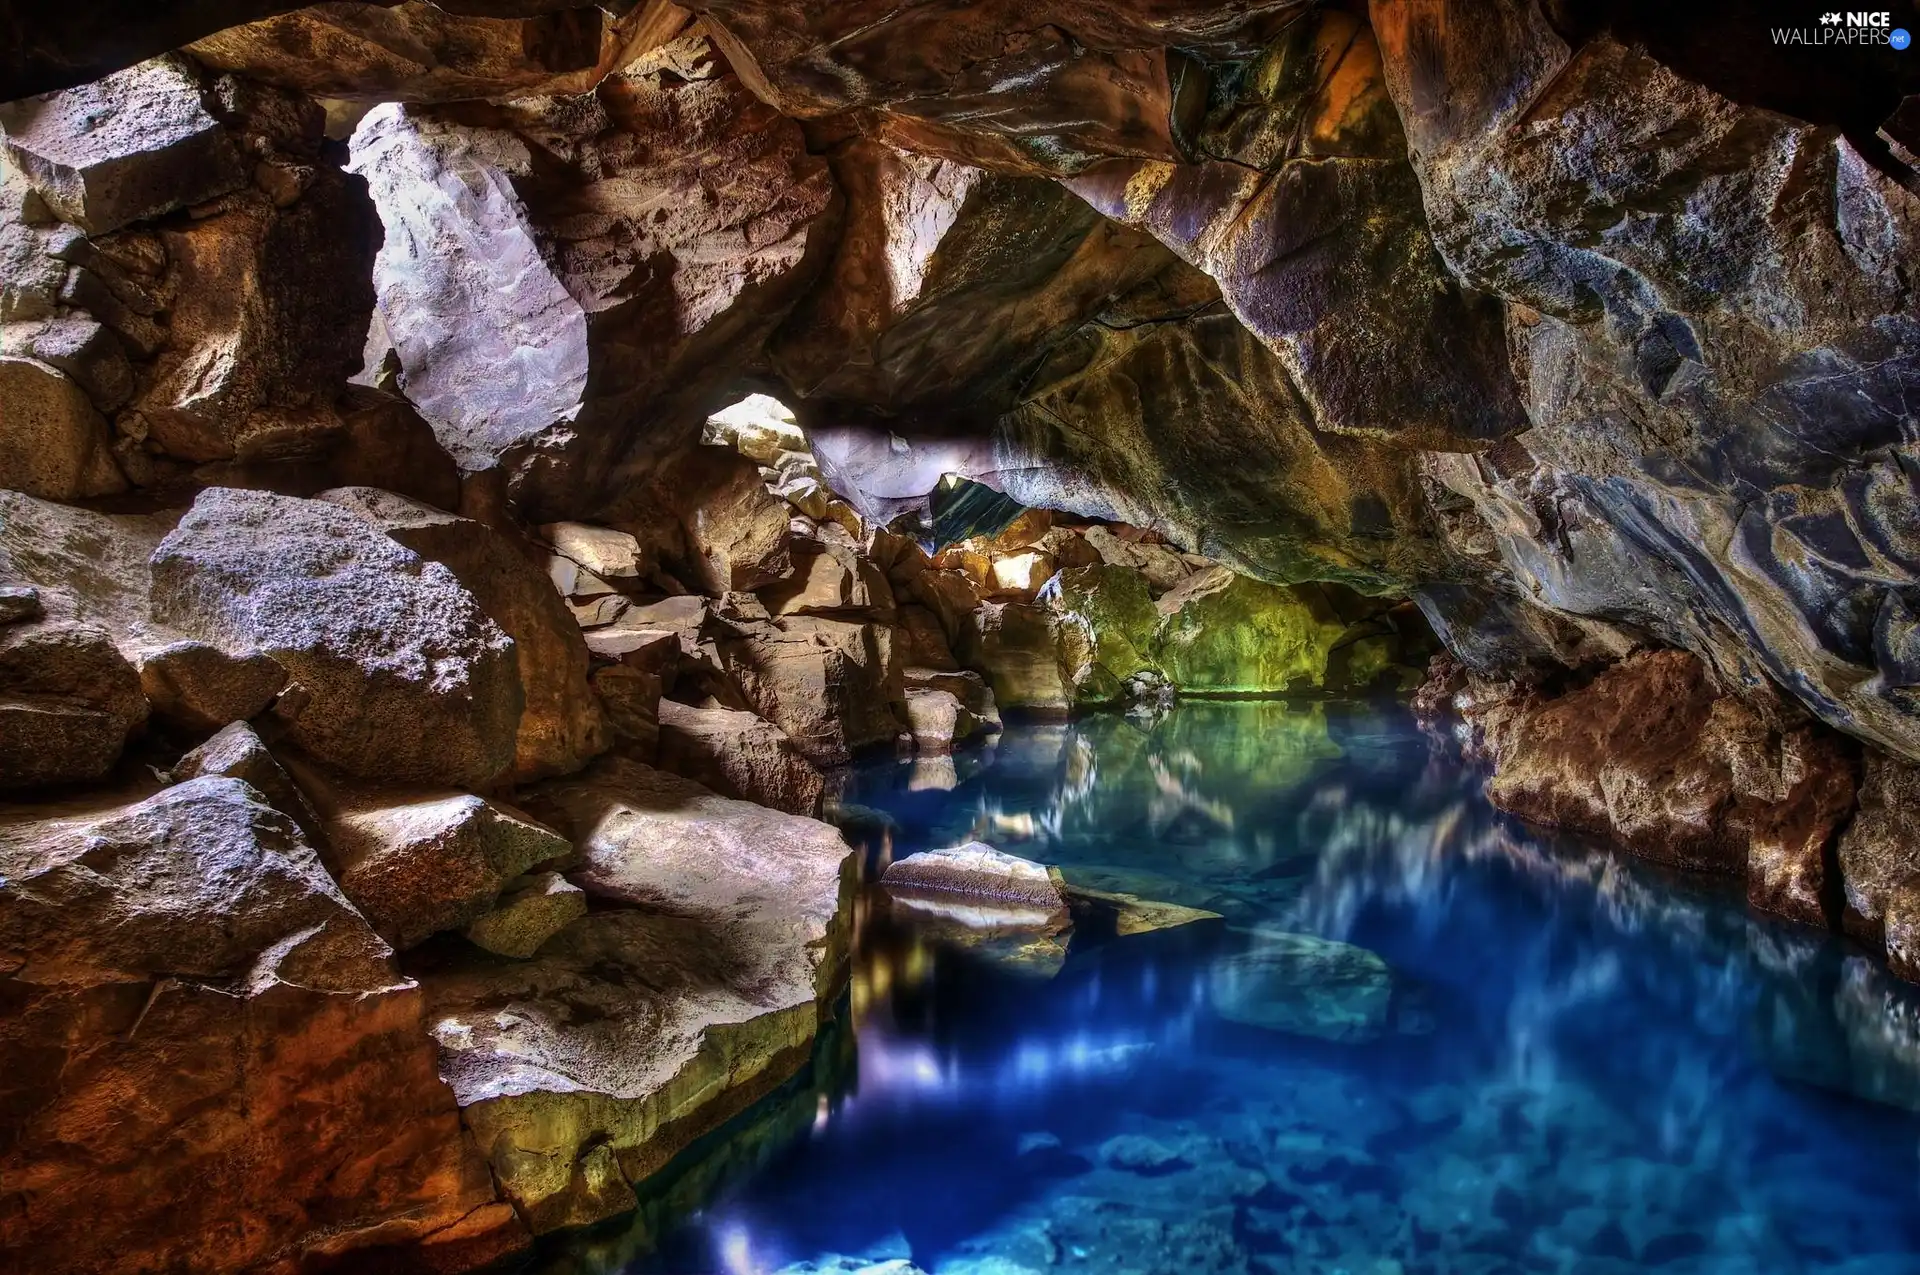 River, rocks, cave